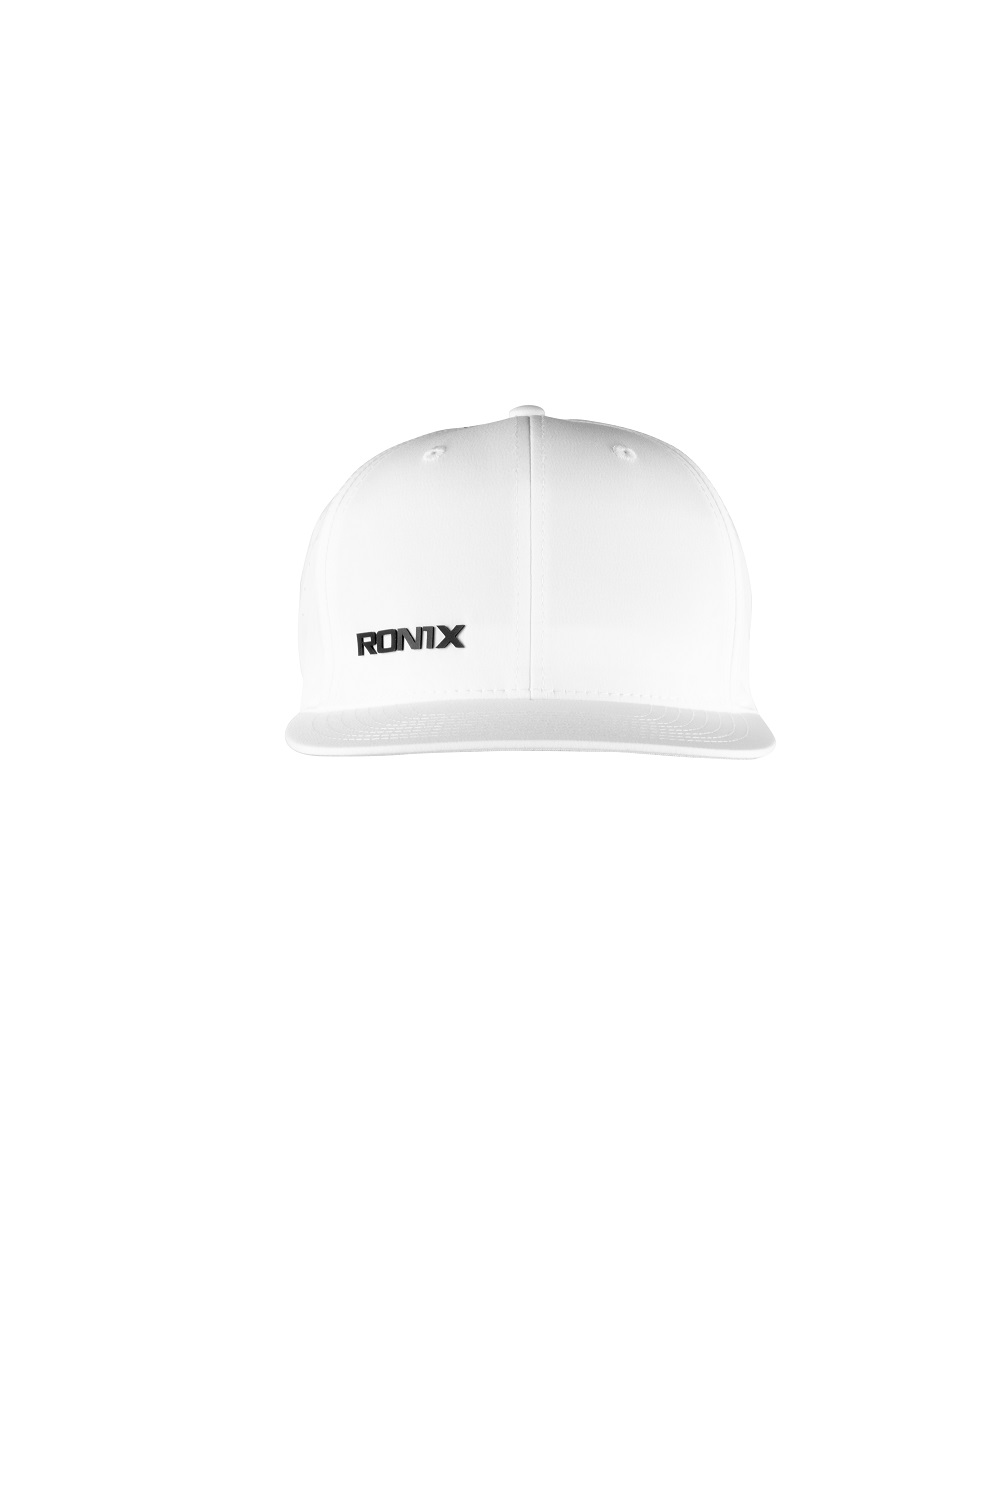 Ronix Tempest - 6 Panel - White - Adjustable Snap Back